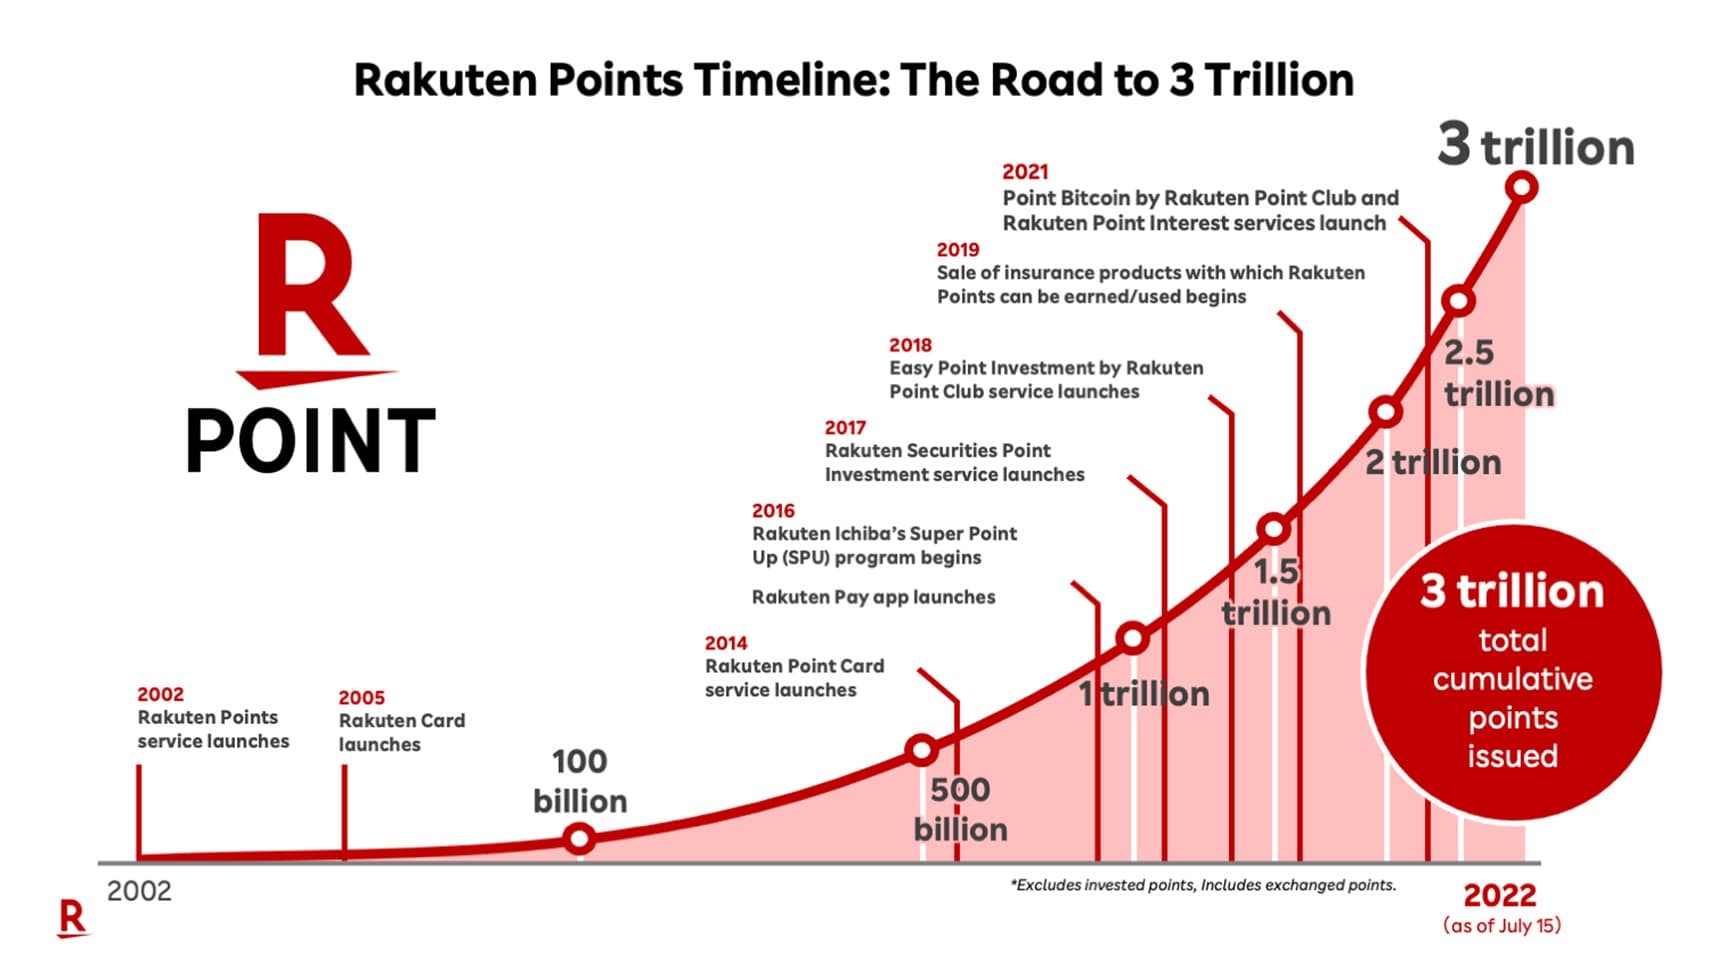 Rakuten points 3 trillion points issued graph